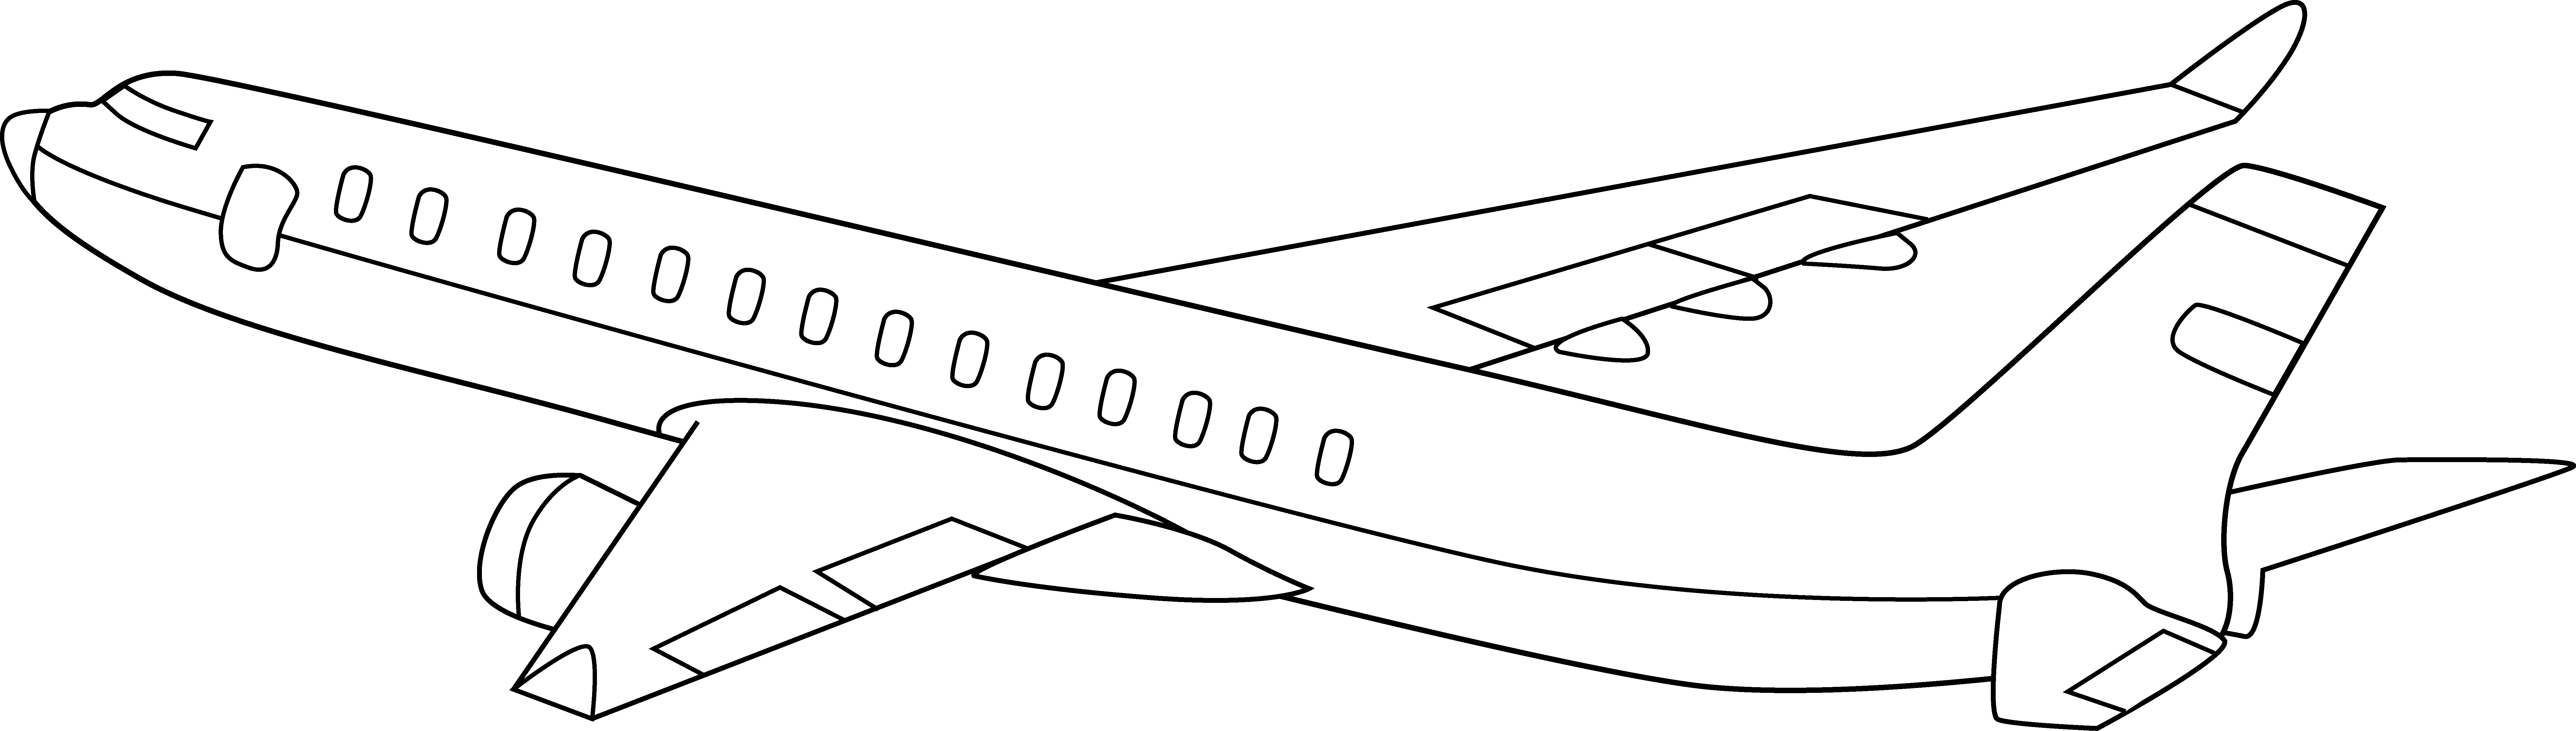 plane crash clip art - photo #24